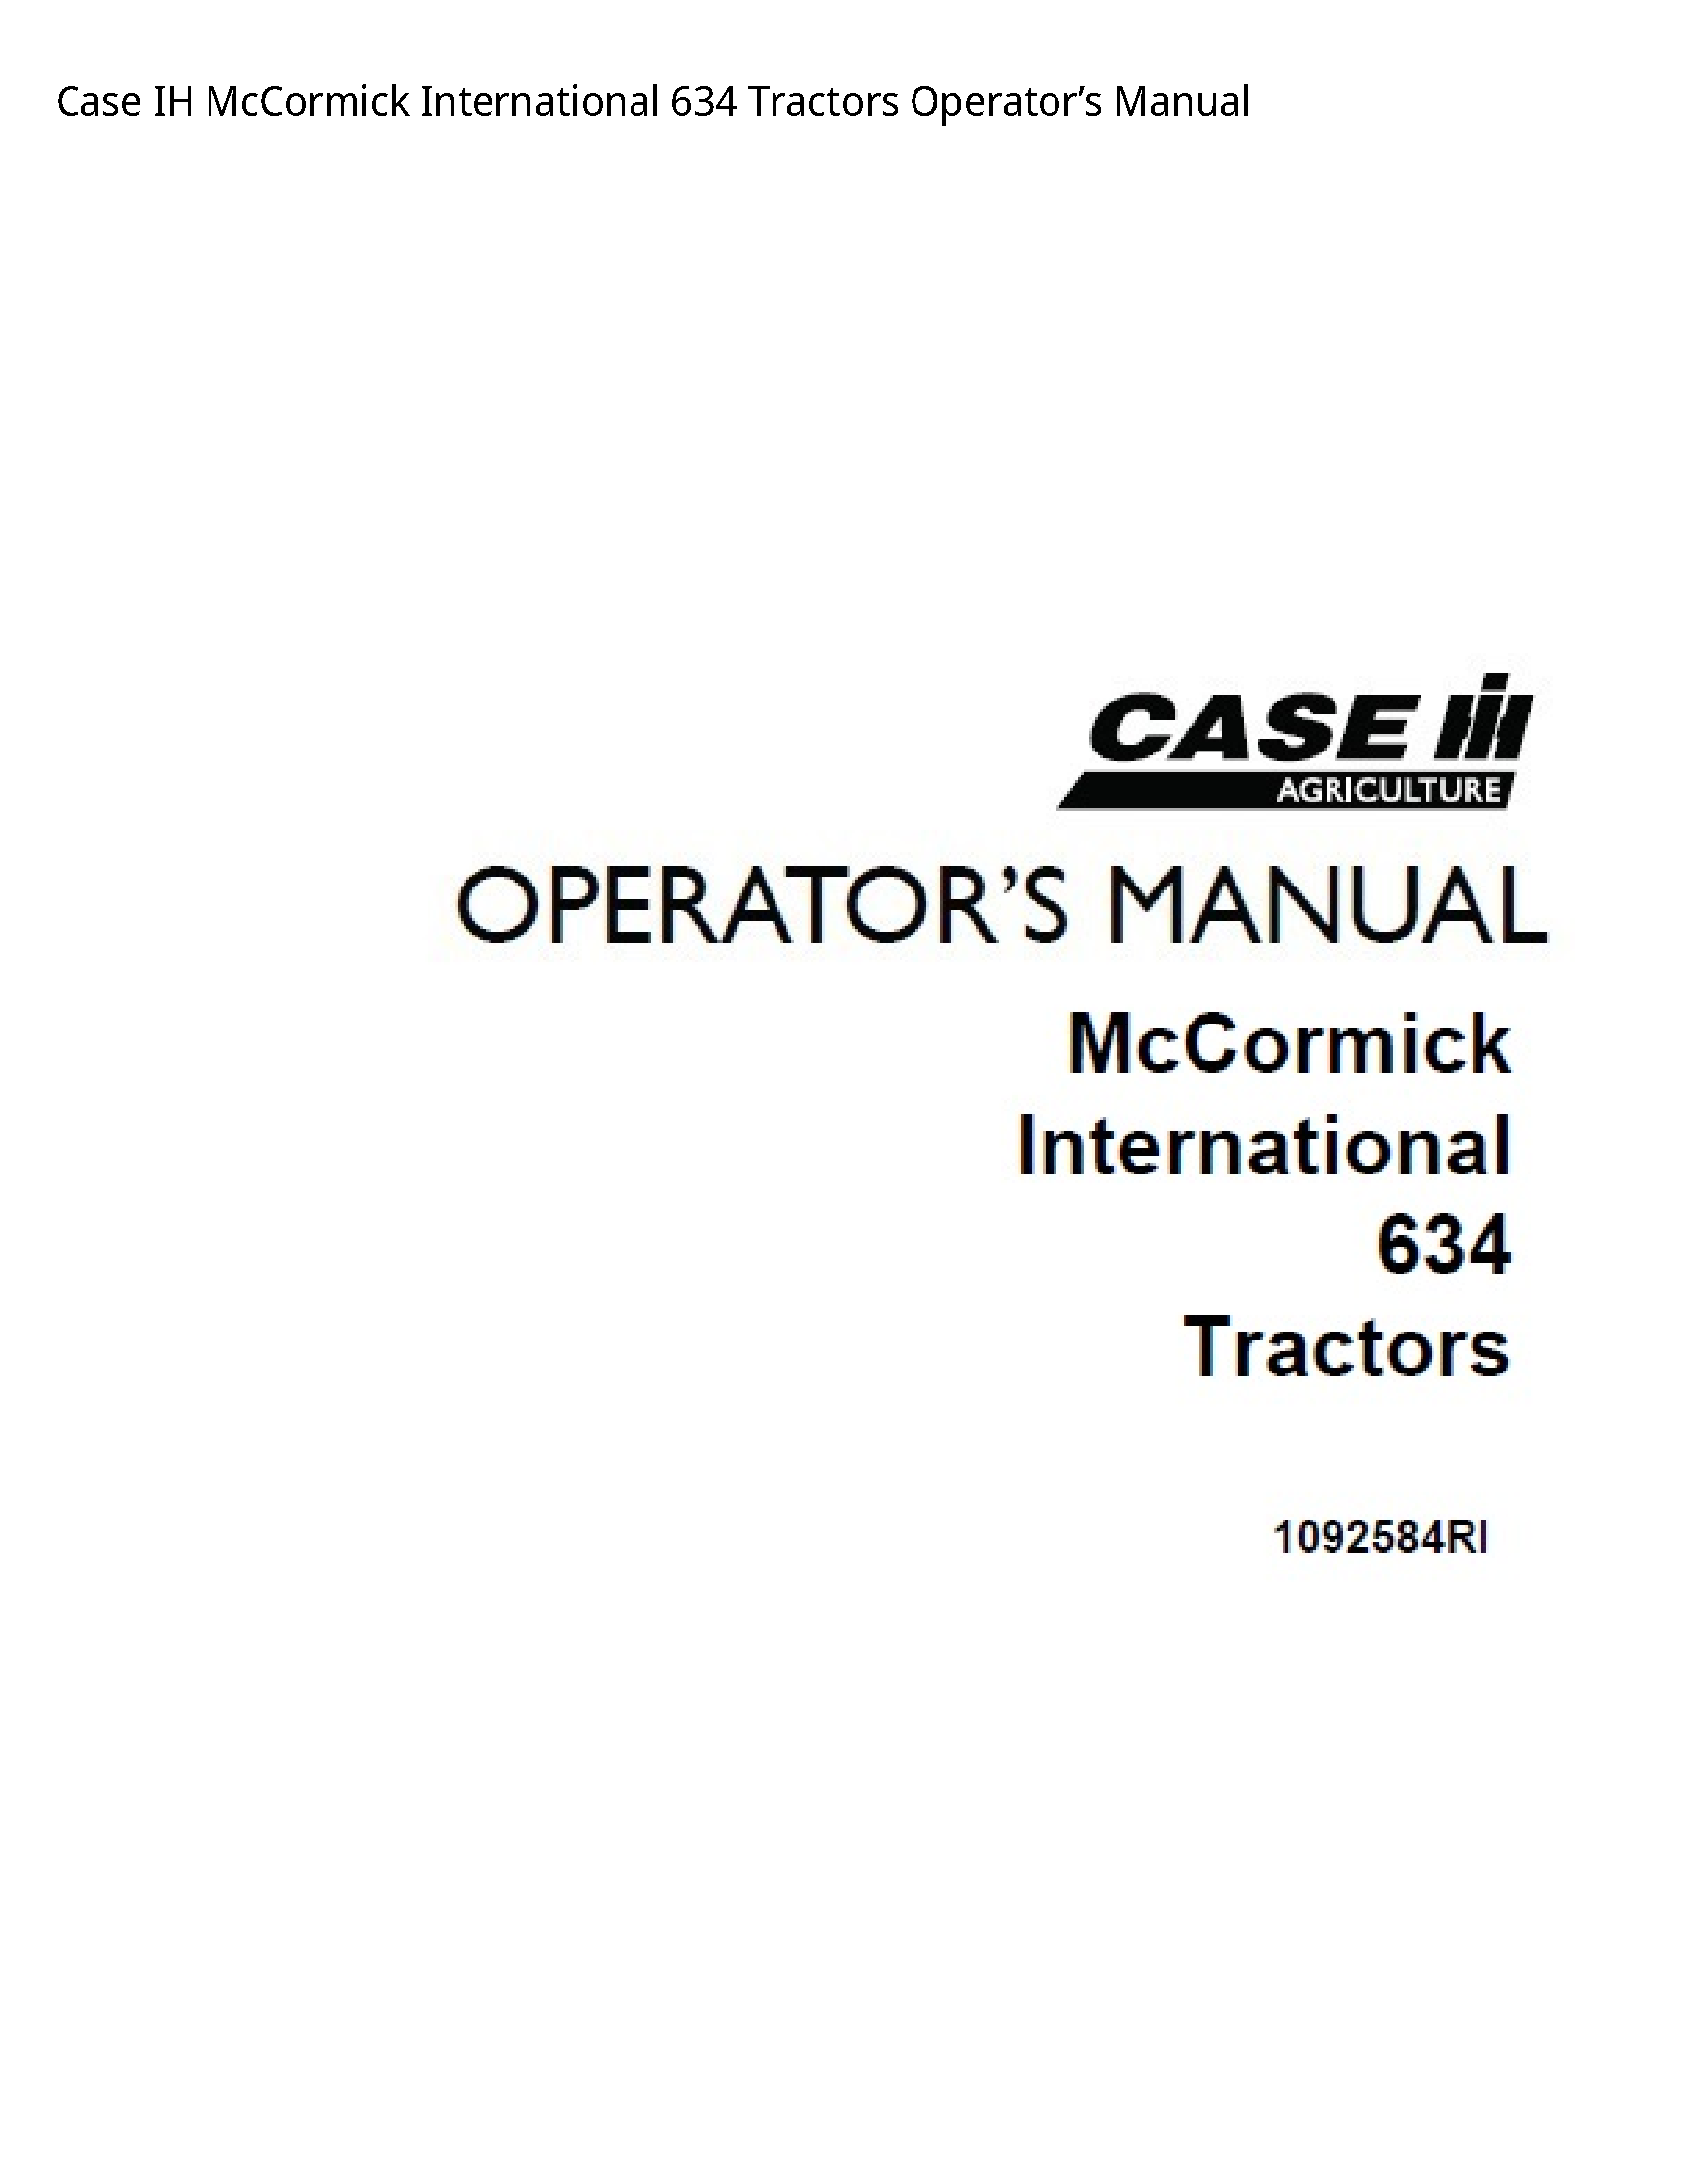 Case/Case IH 634 IH McCormick International Tractors Operator’s manual